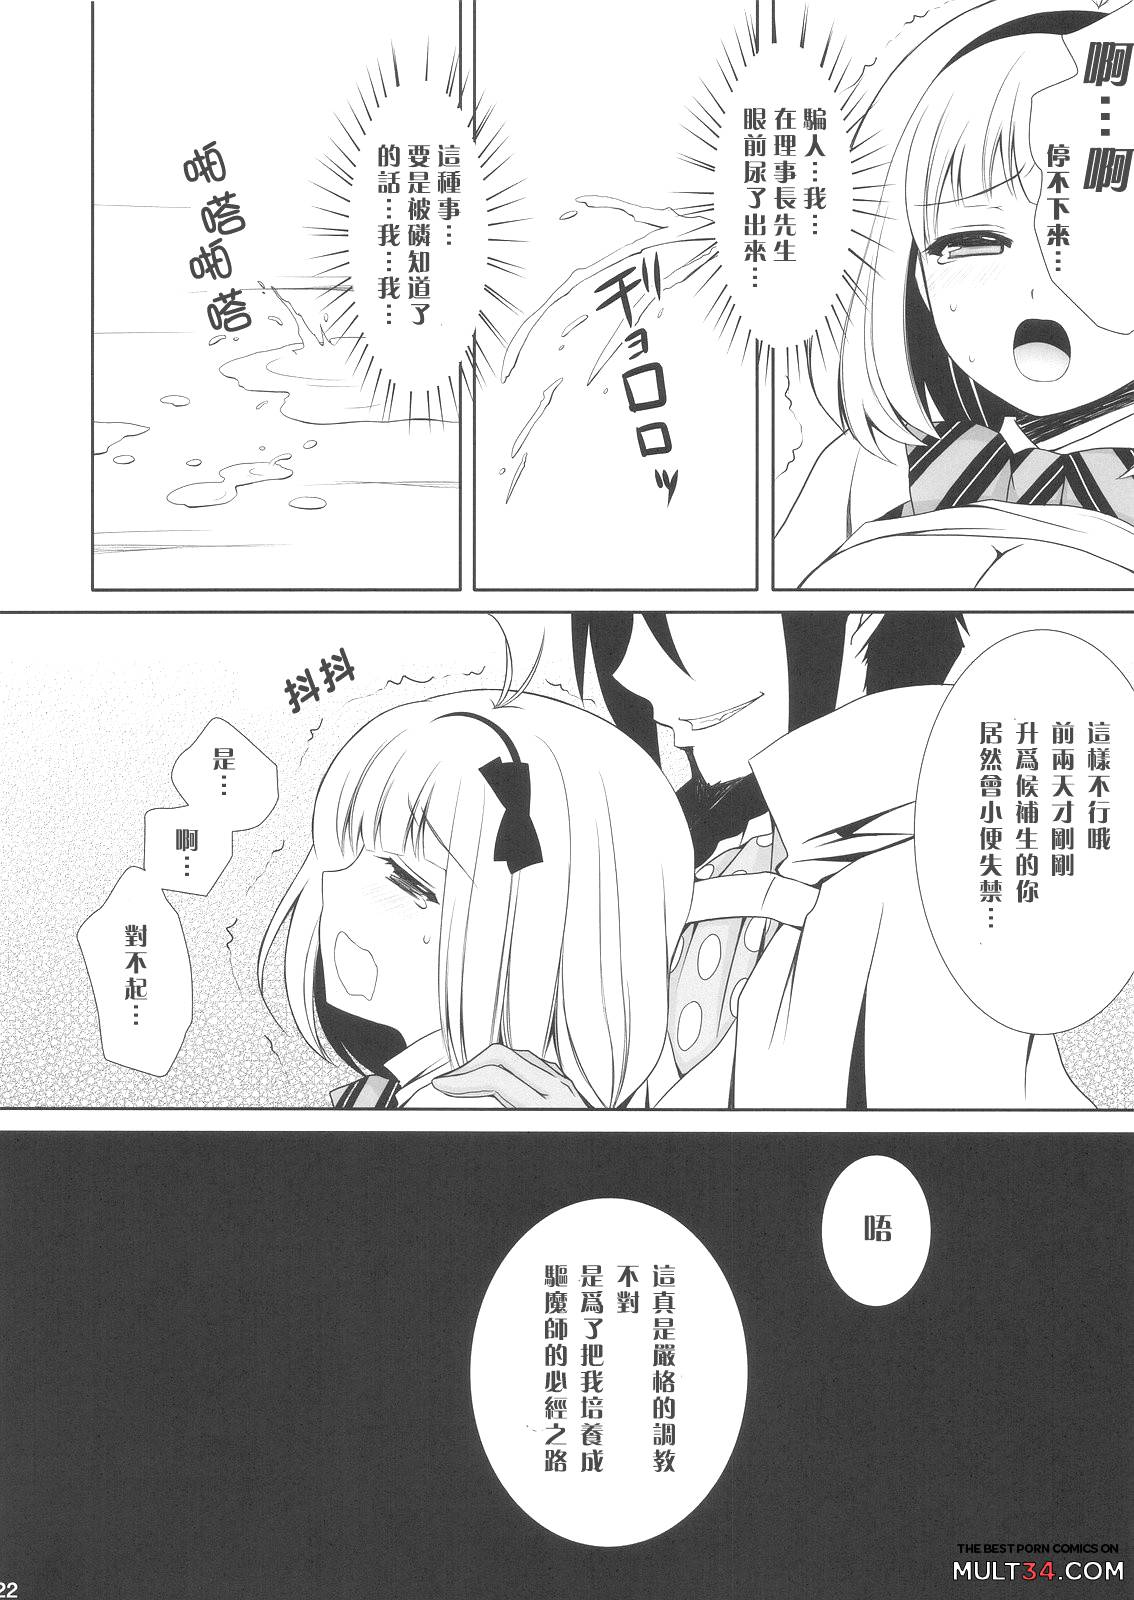 Exorcist Shiemi-chan page 19